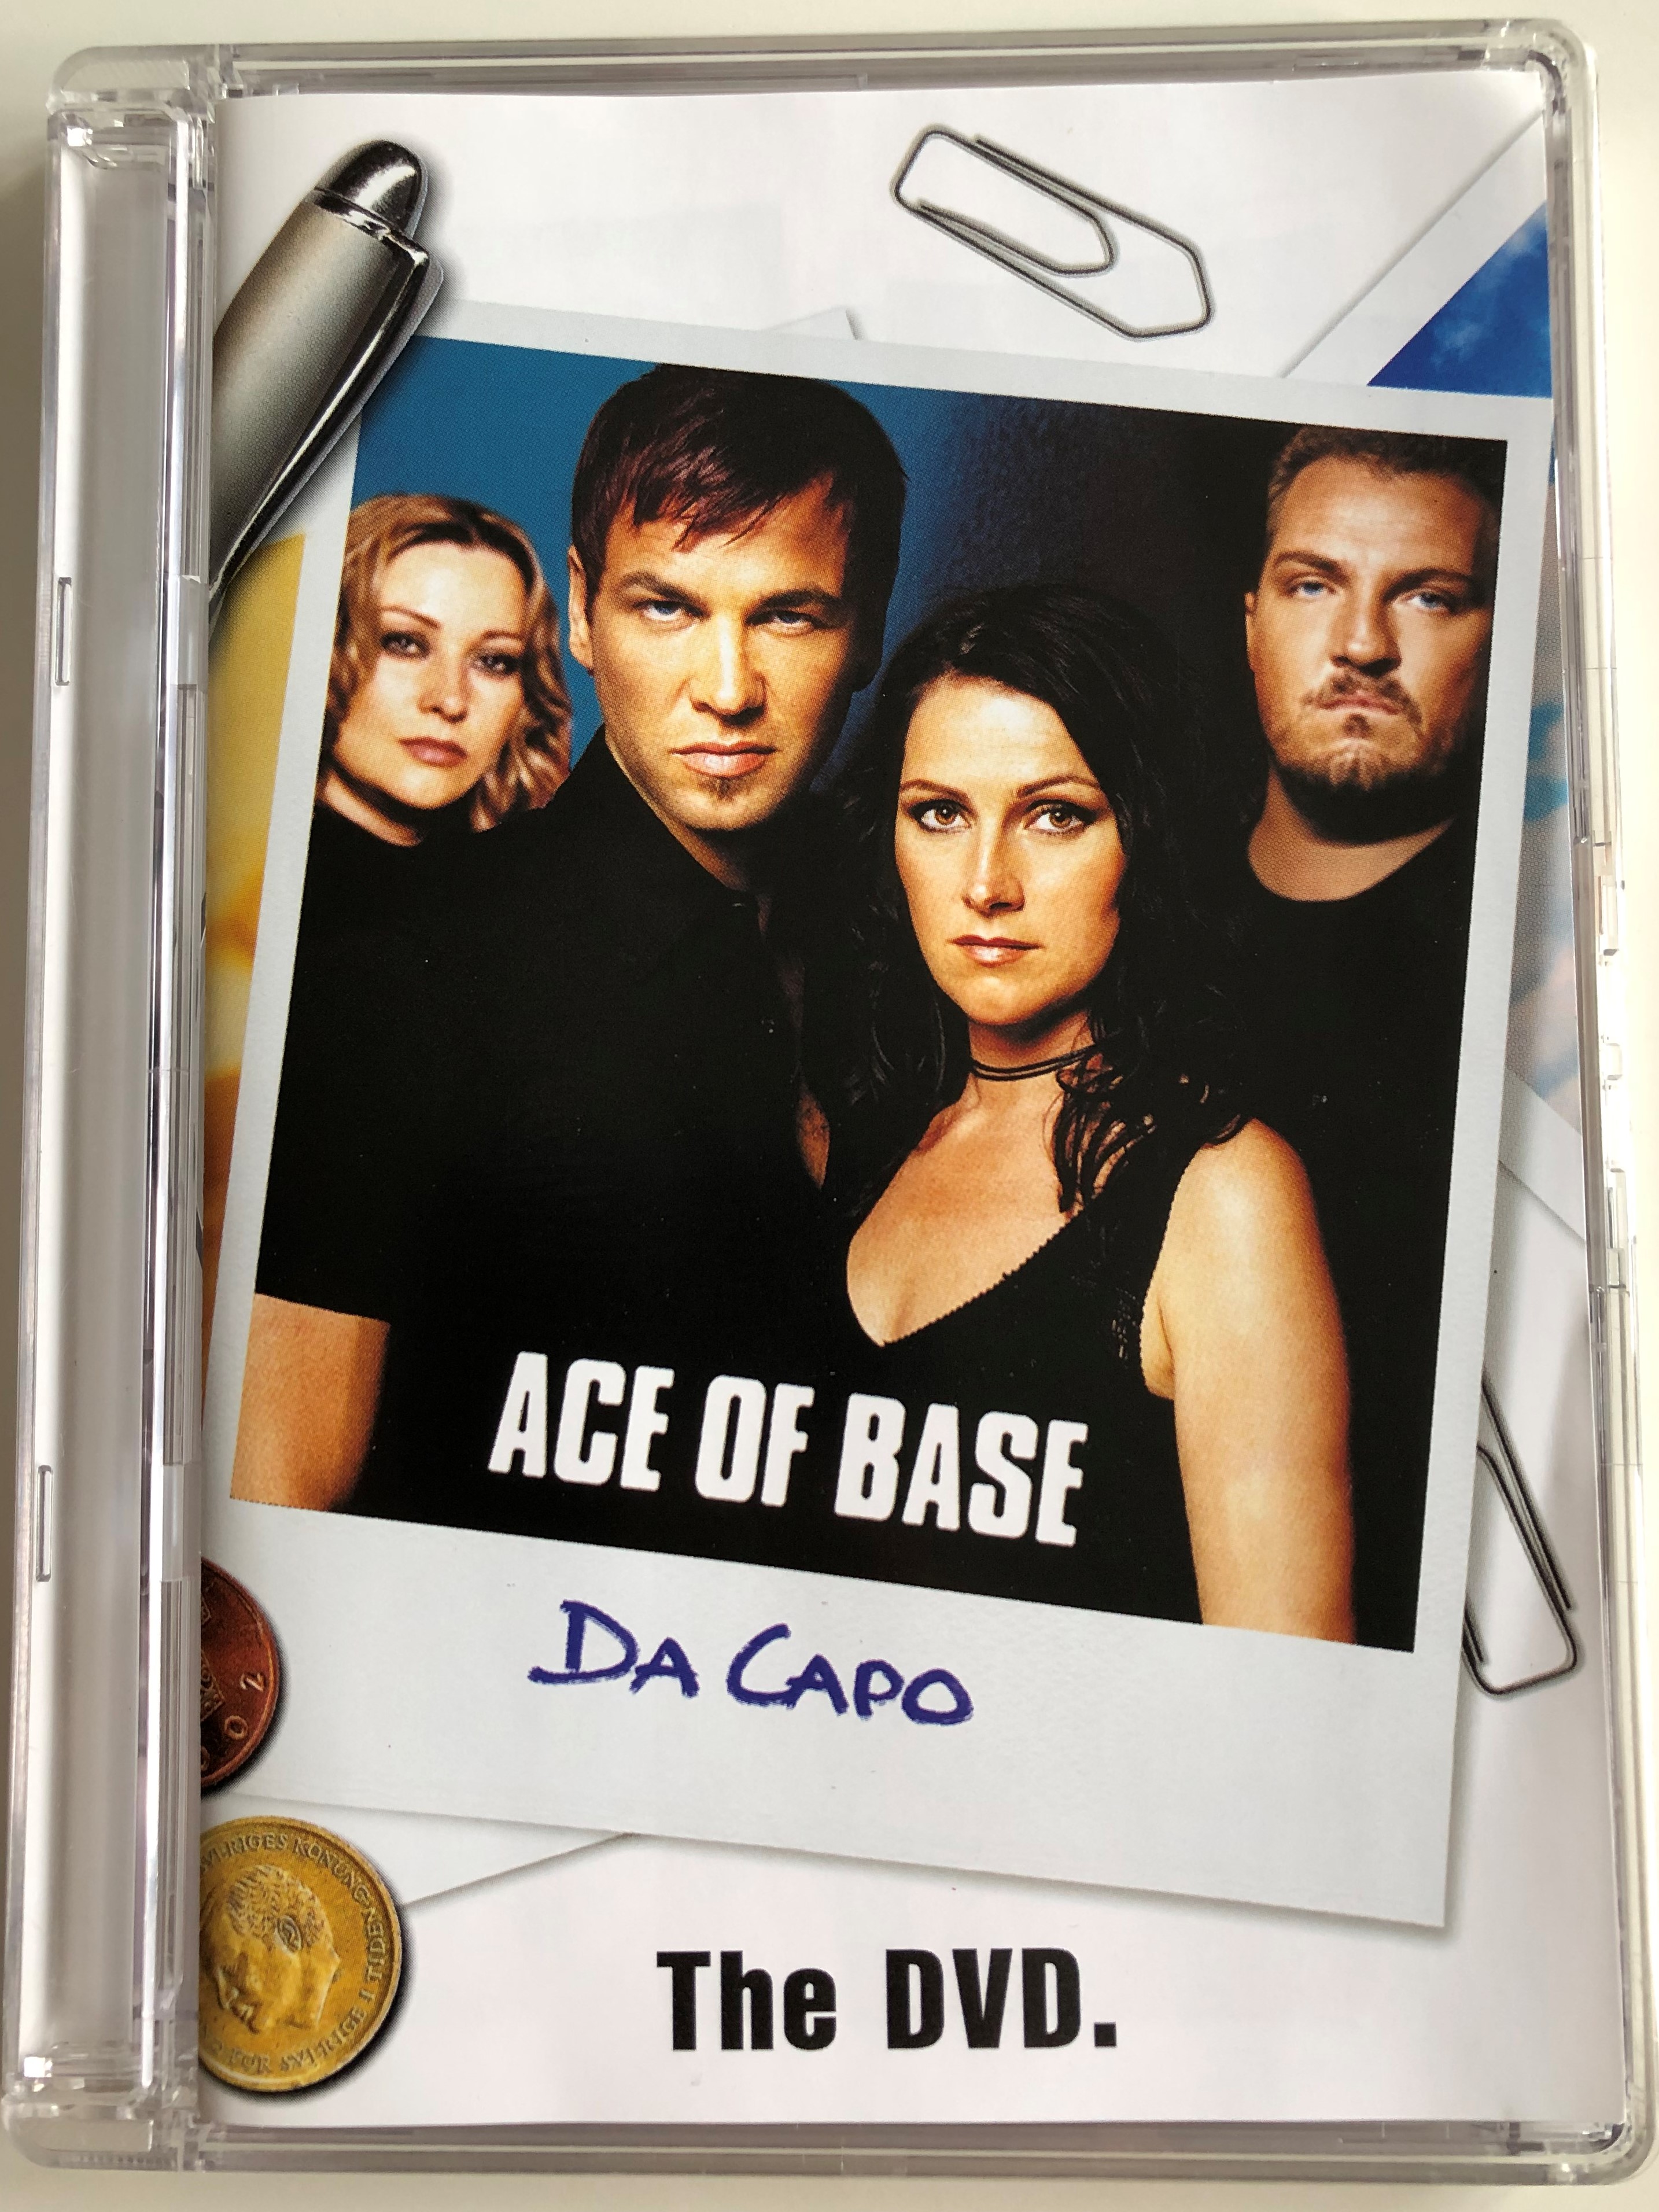 Ace of Base - Da Capo - the DVD / Complete Album in Surround Sound / Bonus:  + 14 Video Clips / Biography & Discography - bibleinmylanguage